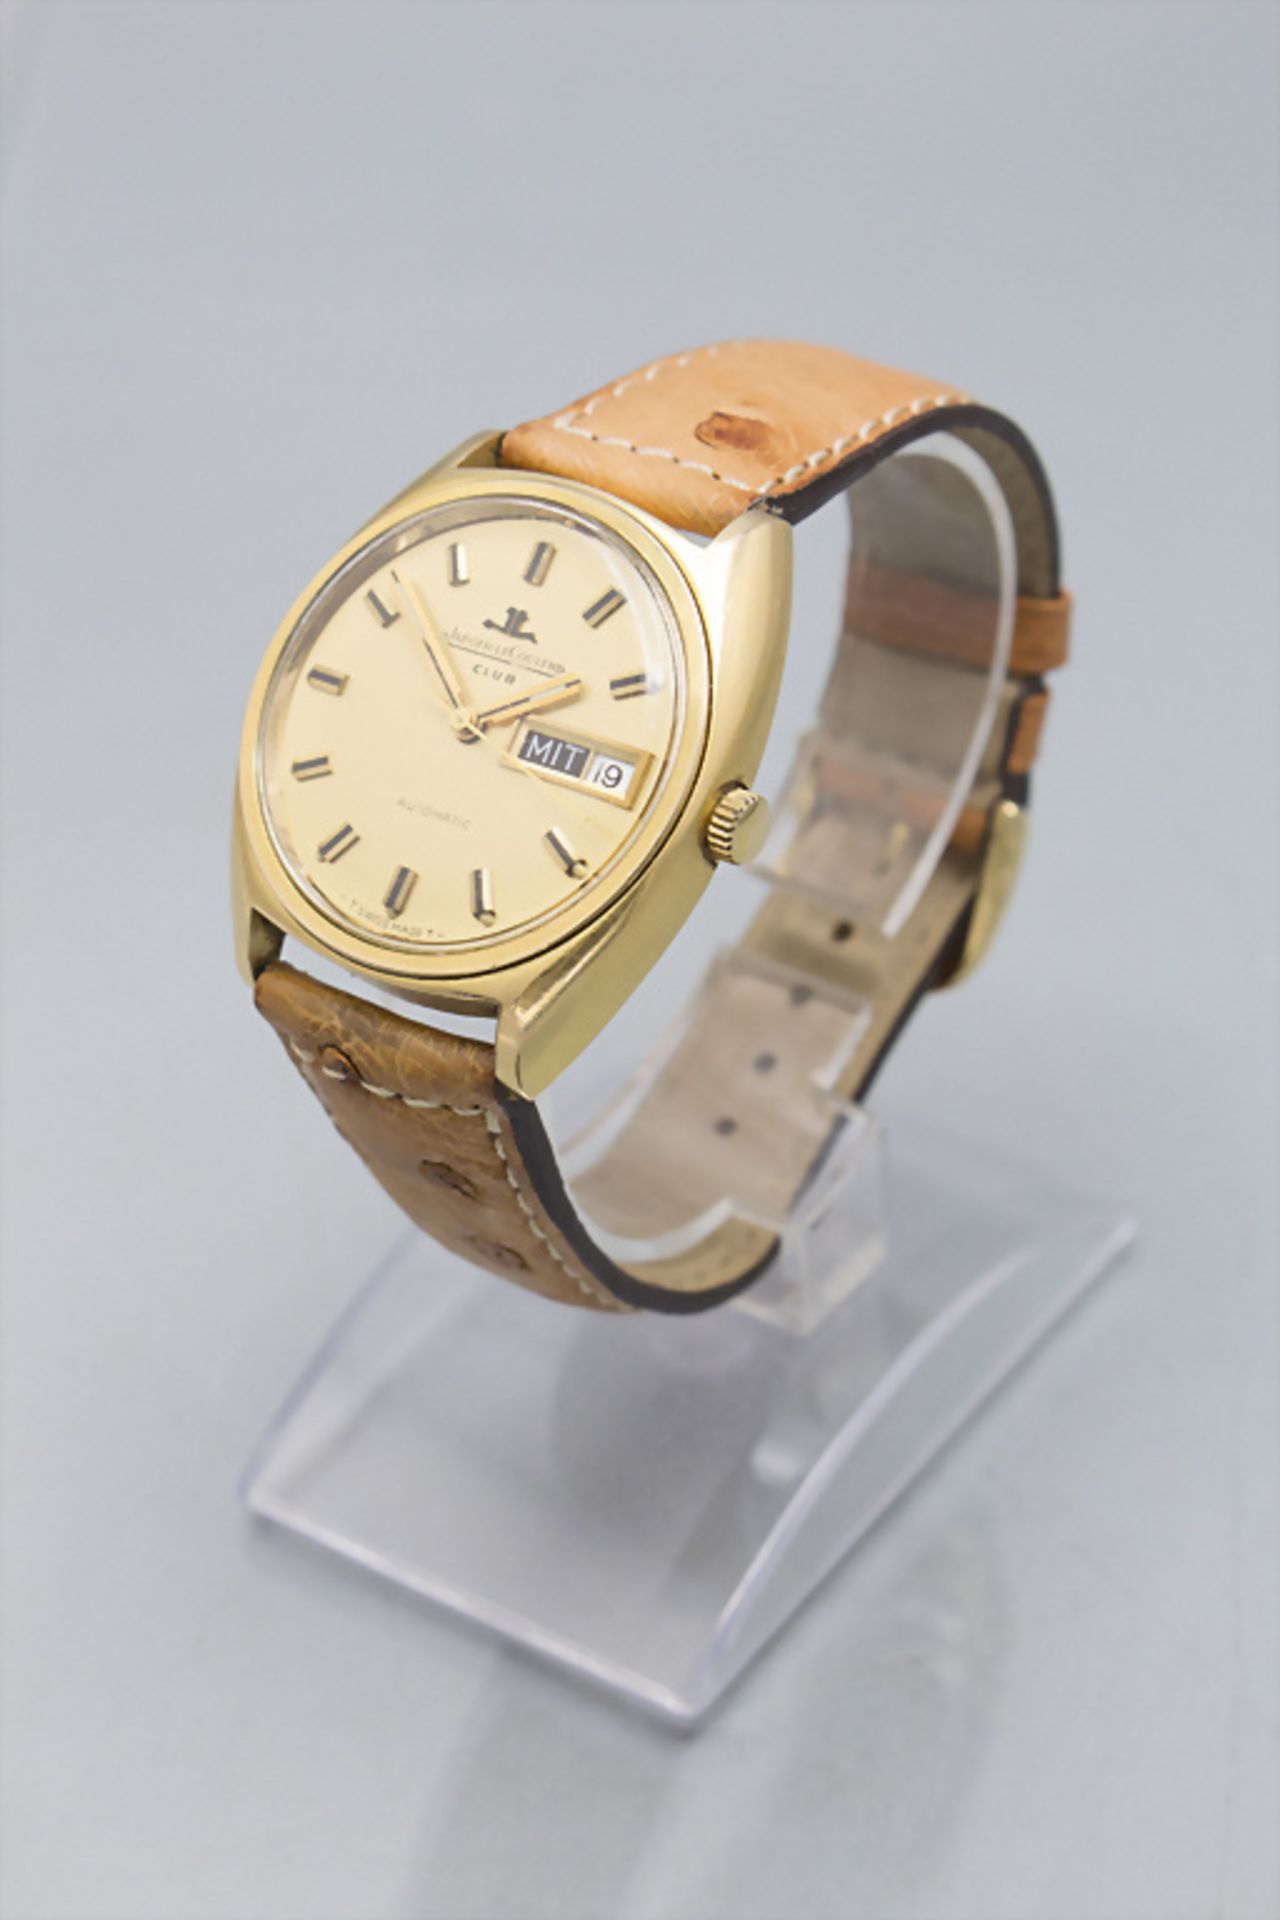 Herrenarmbanduhr / A men's wristwatch, Jaeger Le Coultre Club, Schweiz / Swiss - Image 2 of 7